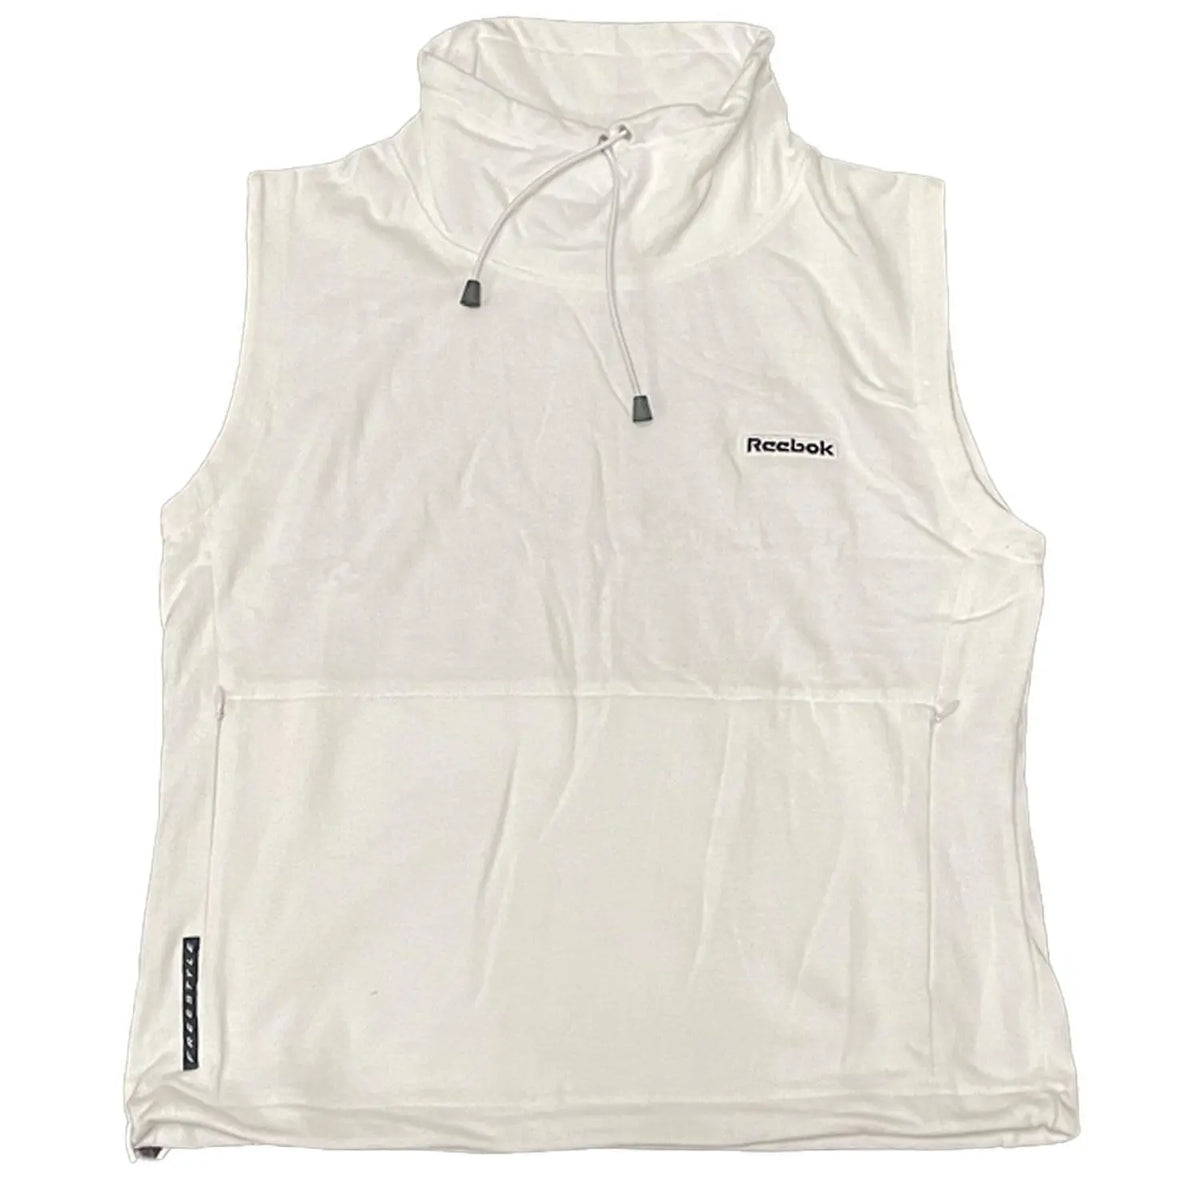 Reebok Womens High Neck Sleeveless Sweatshirt - White - UK Size 12